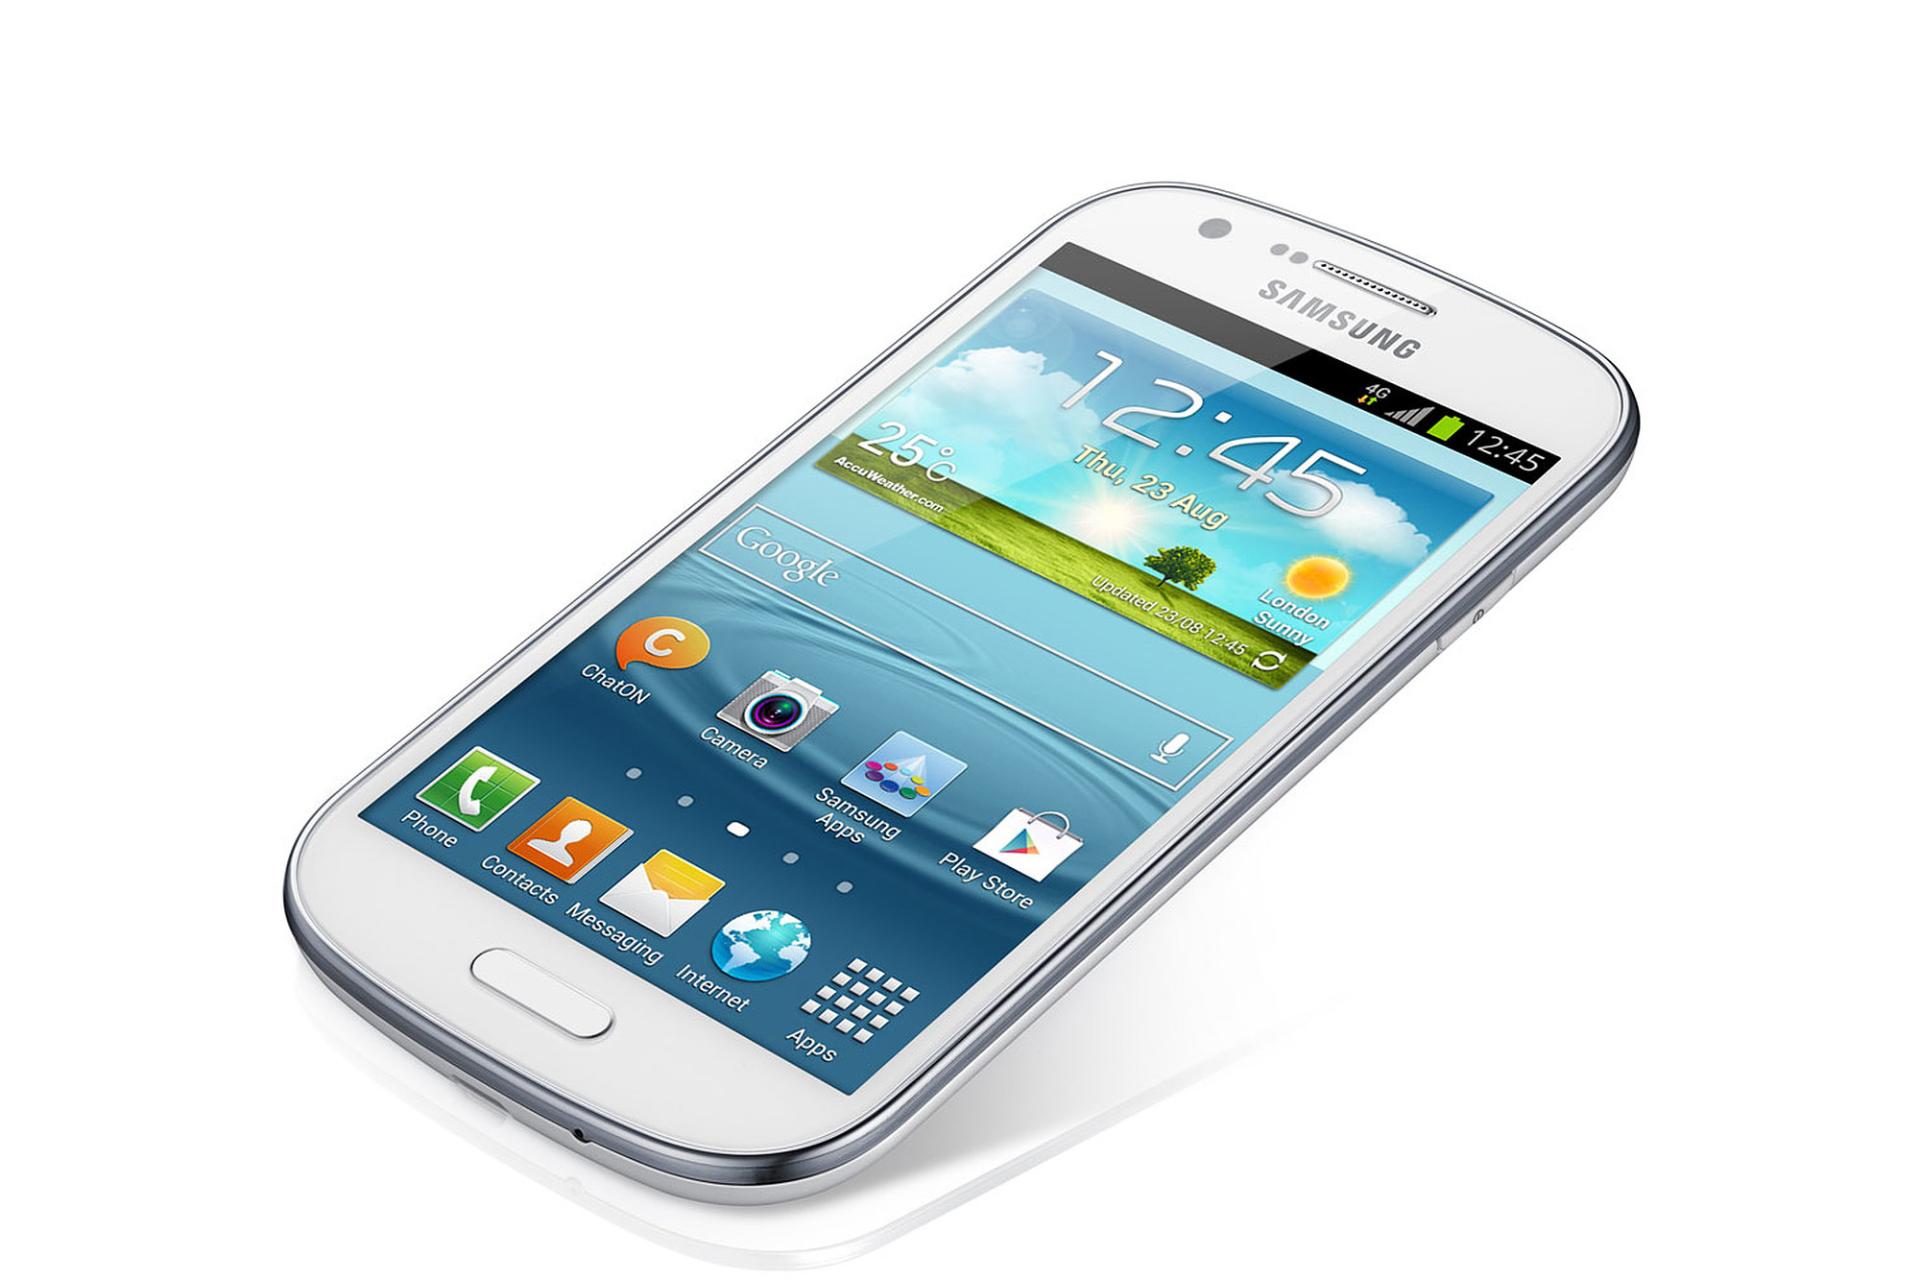 نمایشگر Samsung Galaxy Express I8730